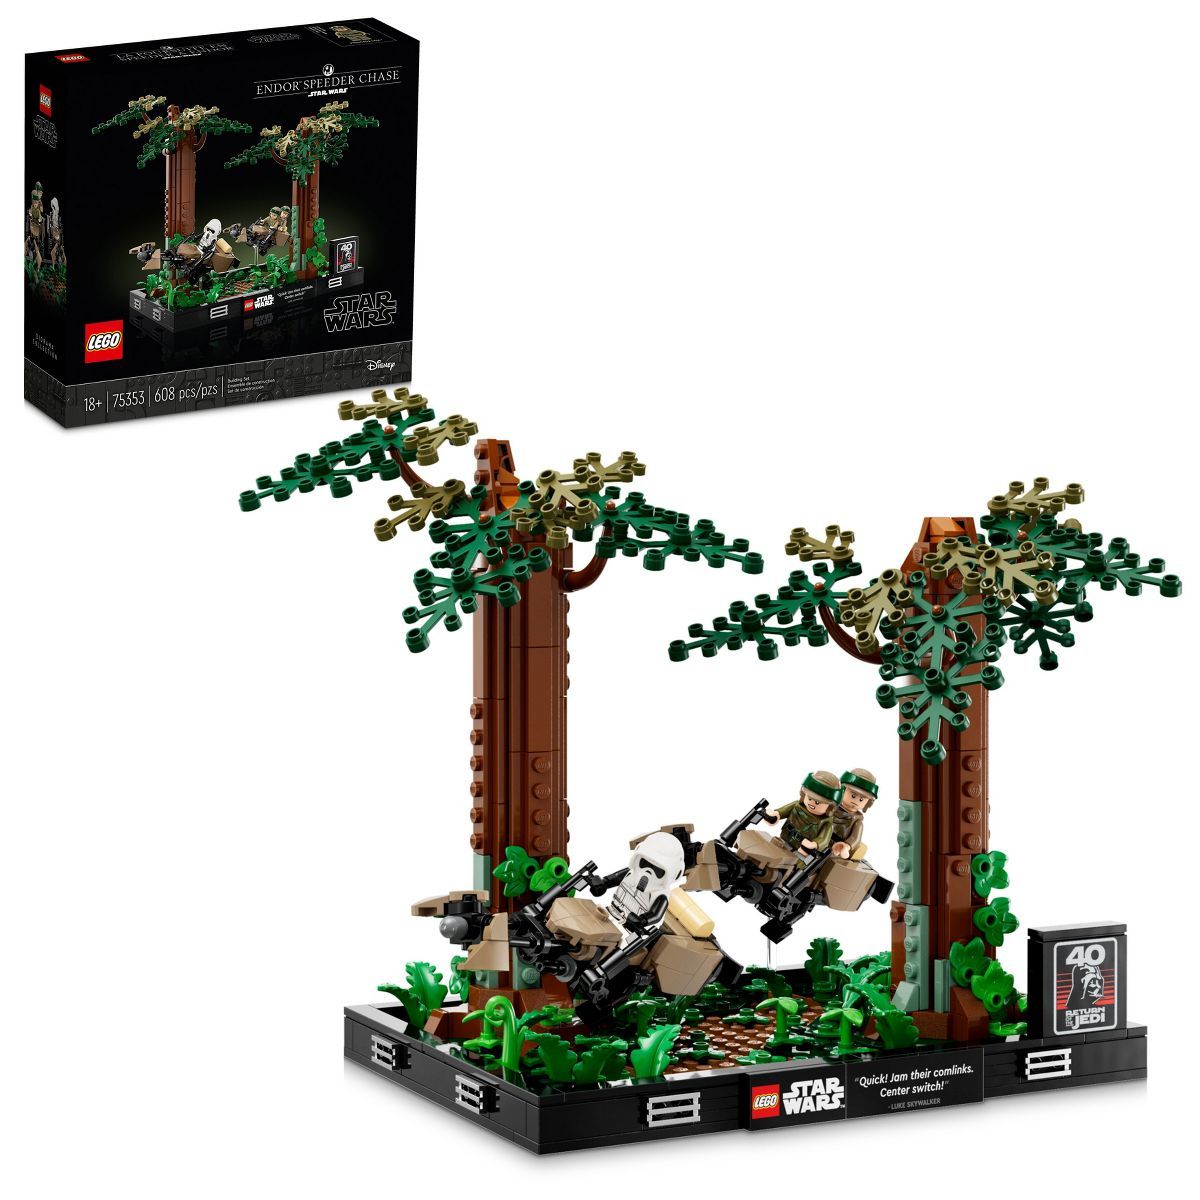 LEGO Star Wars Endor Speeder Chase Diorama Collectible Building Set 75353 | Target